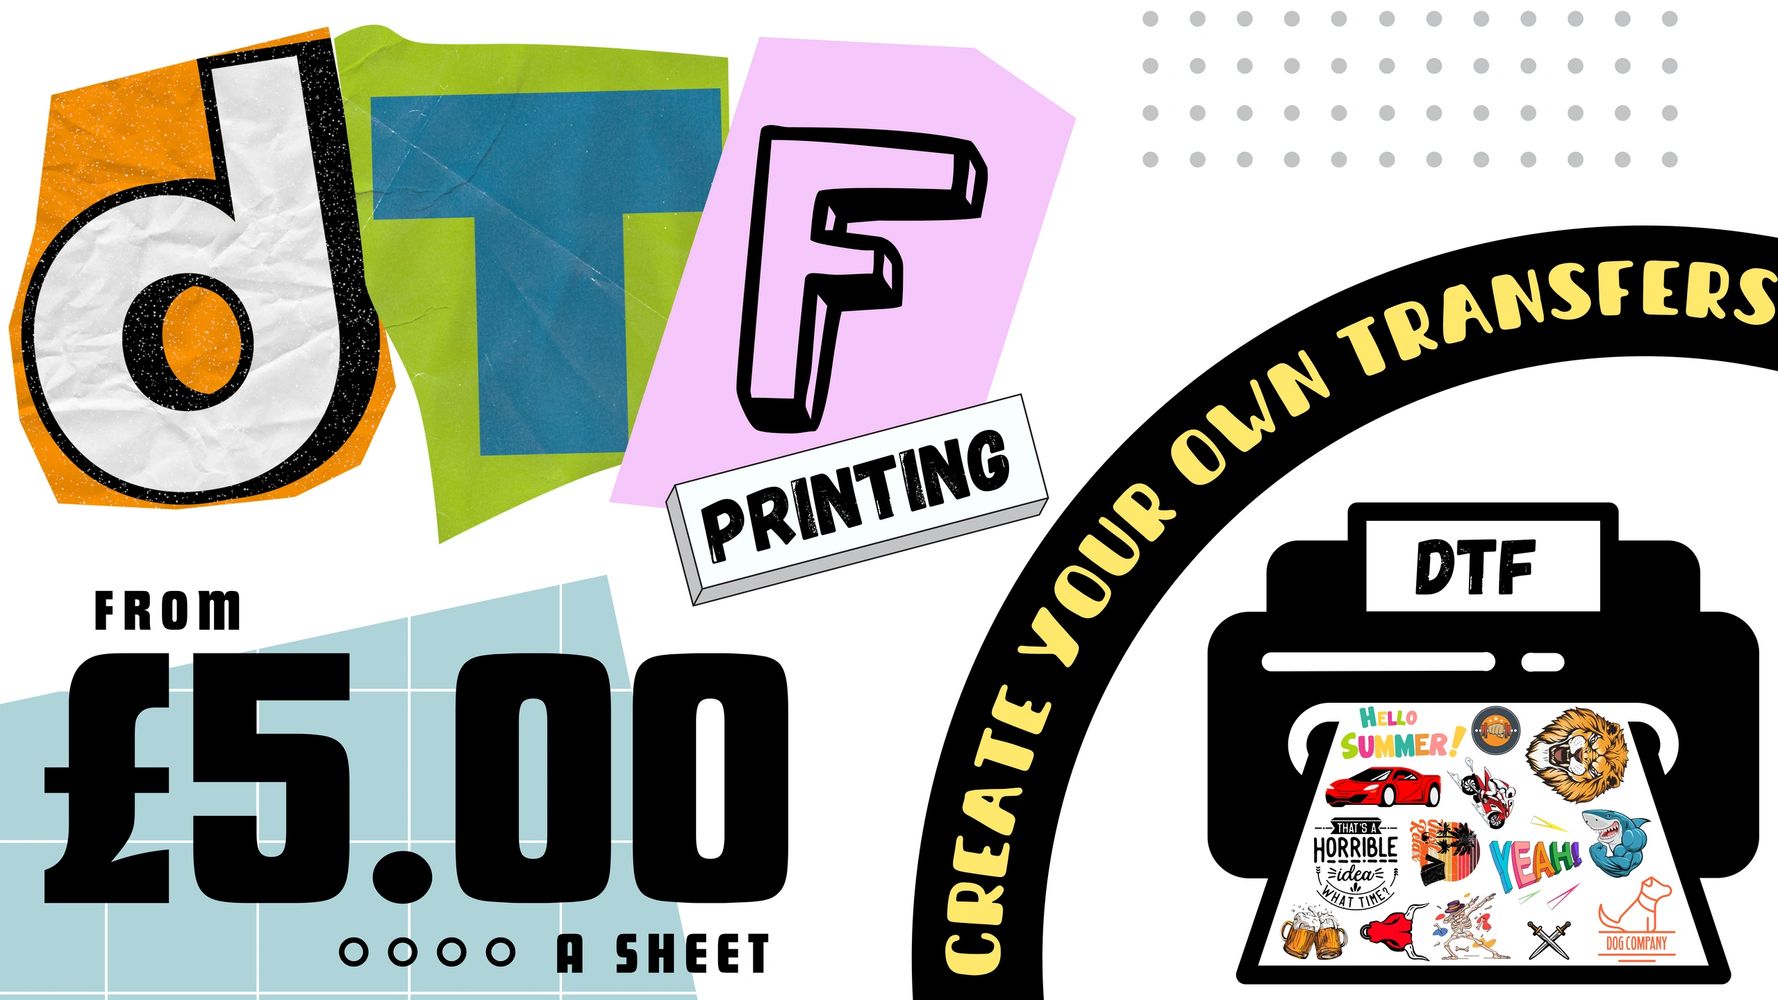 dtf transfers, printing, order prints, dtf, logos, printed clothing, design, merch, merchandise